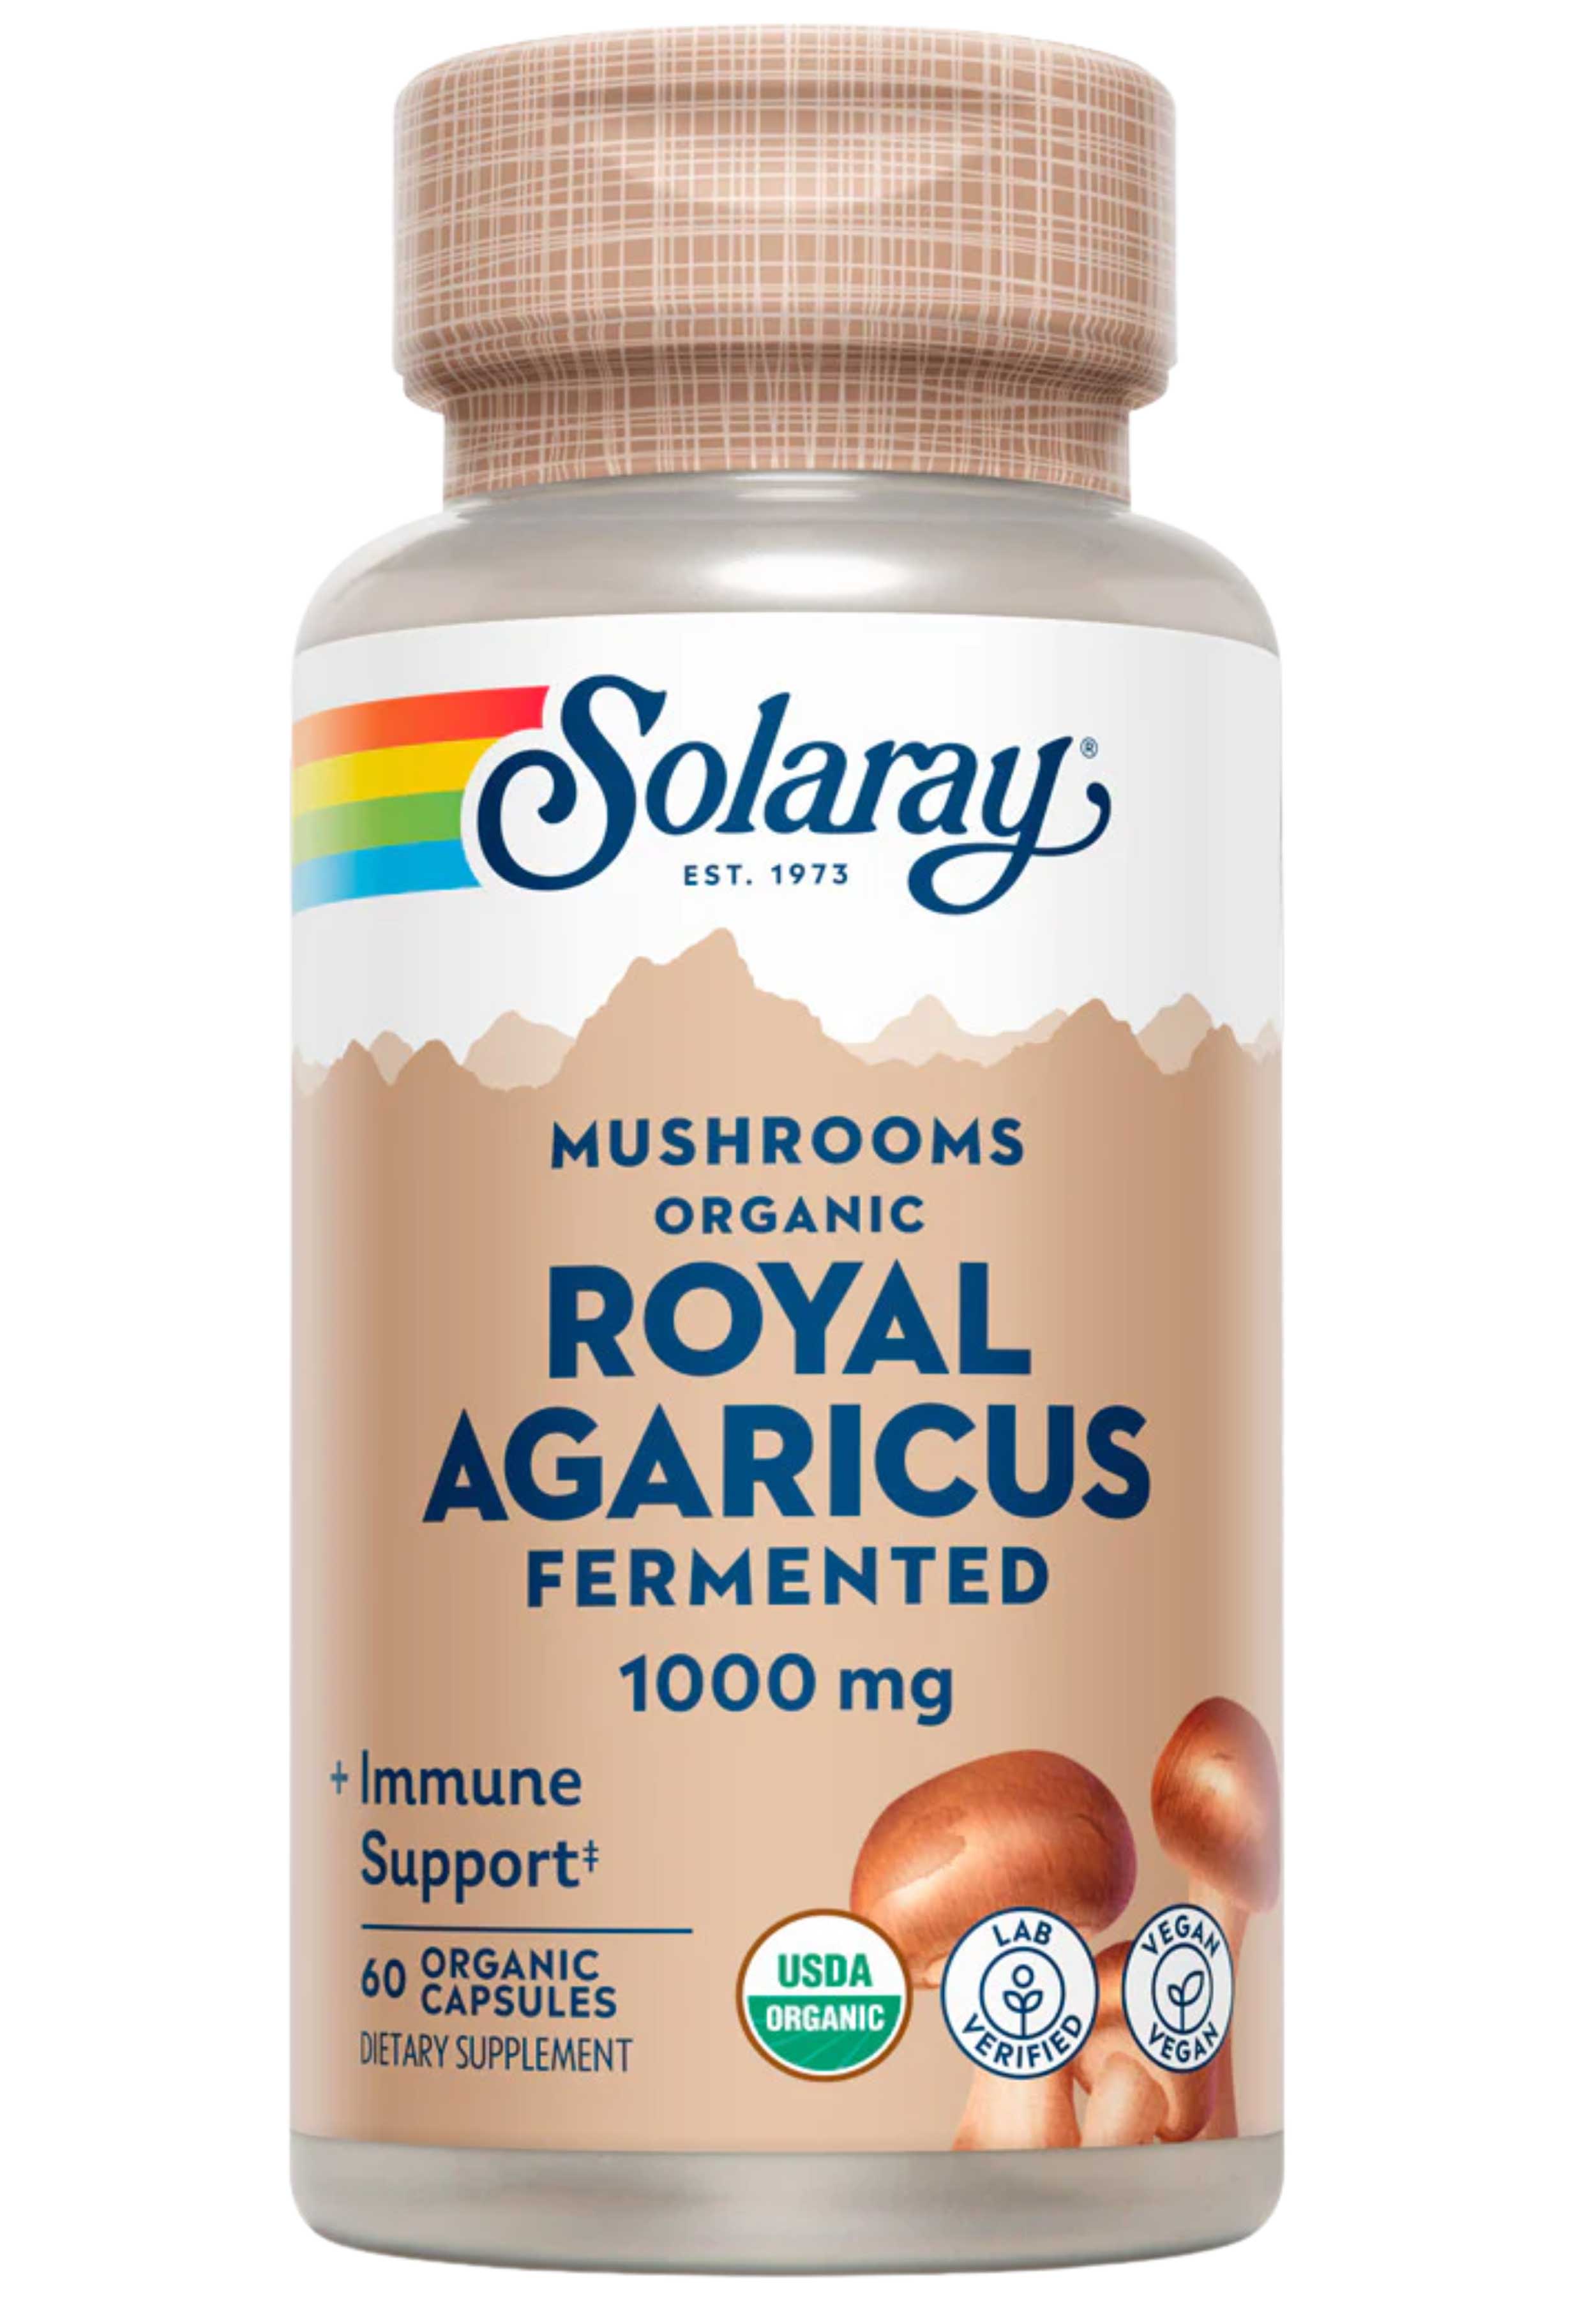 Solaray Fermented Royal Agaricus Organic